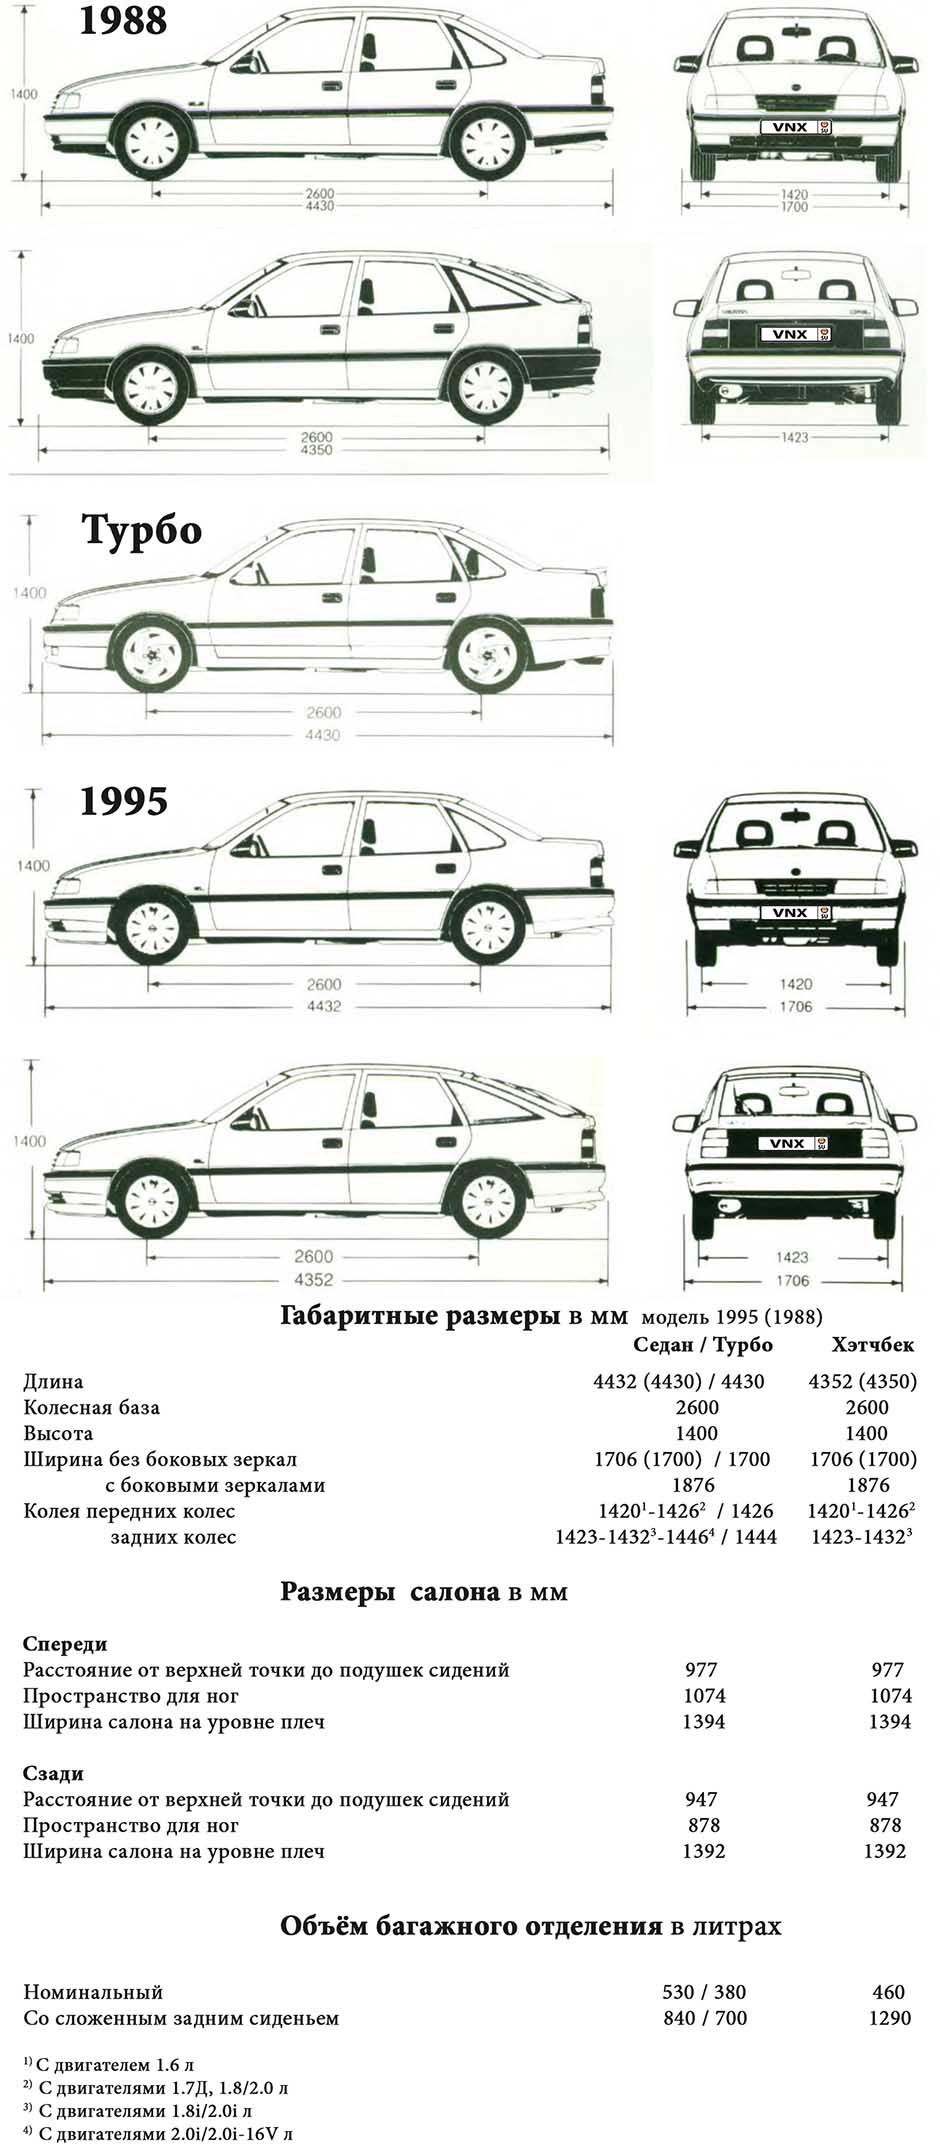 Габаритные размеры Опель Вектра А 1988-1995 (dimensions Opel Vectra A)